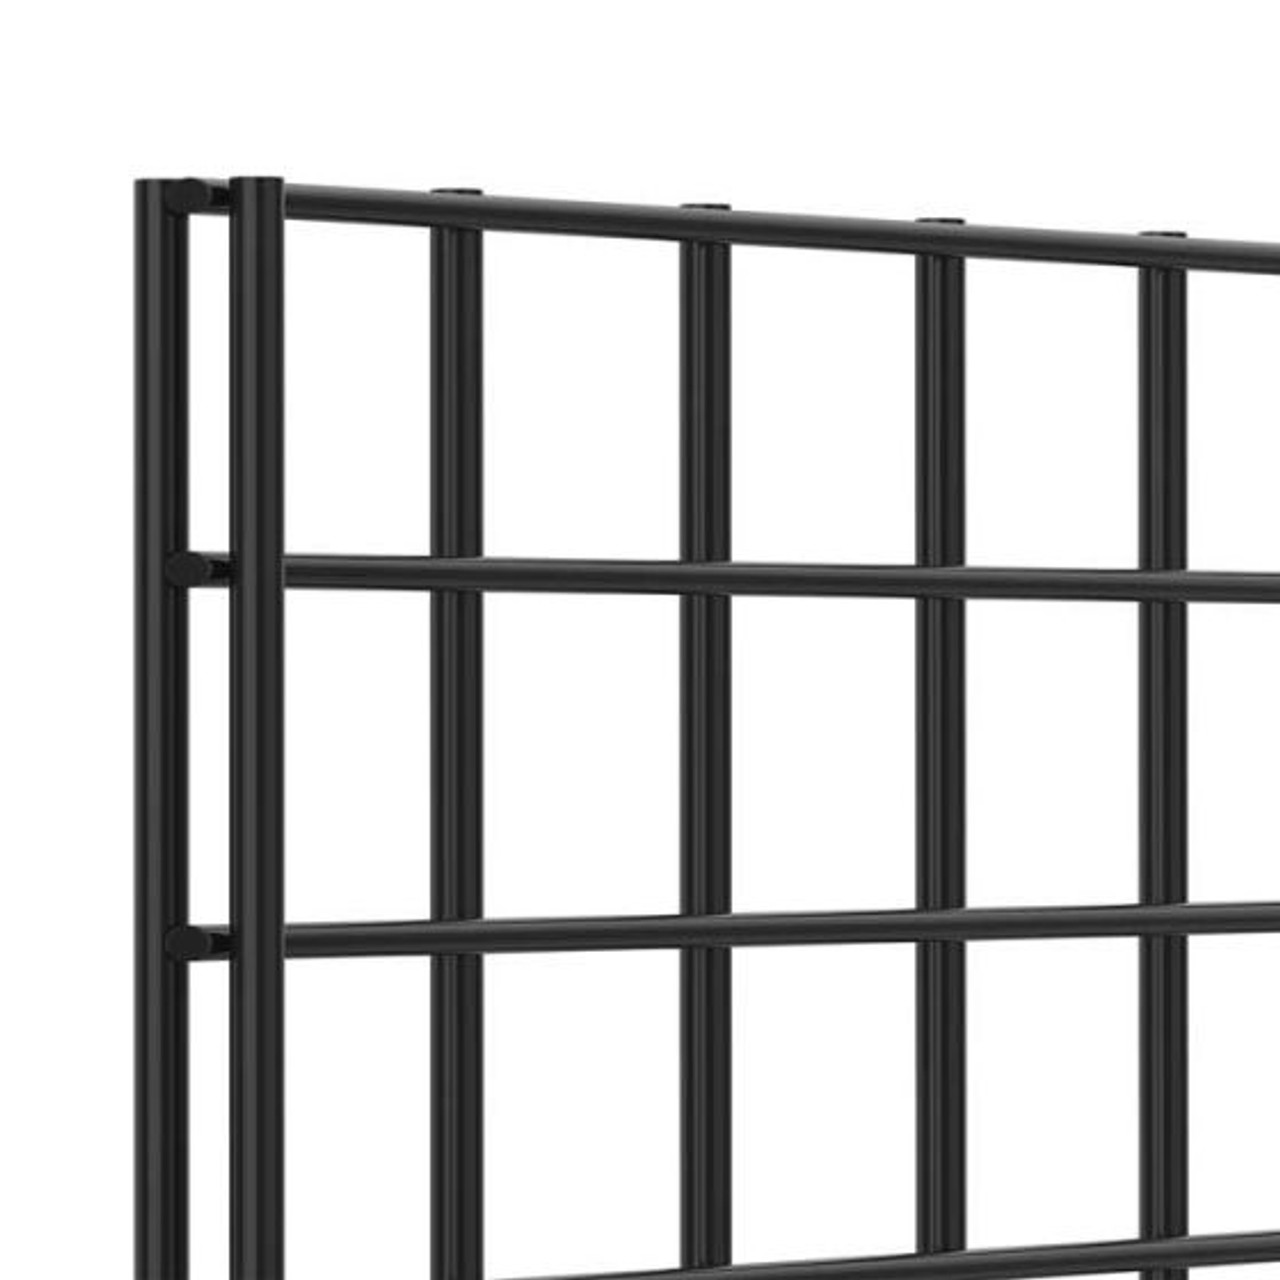 BLK27 Black 2'x7' 2 ft. Wide Gridwall Panels